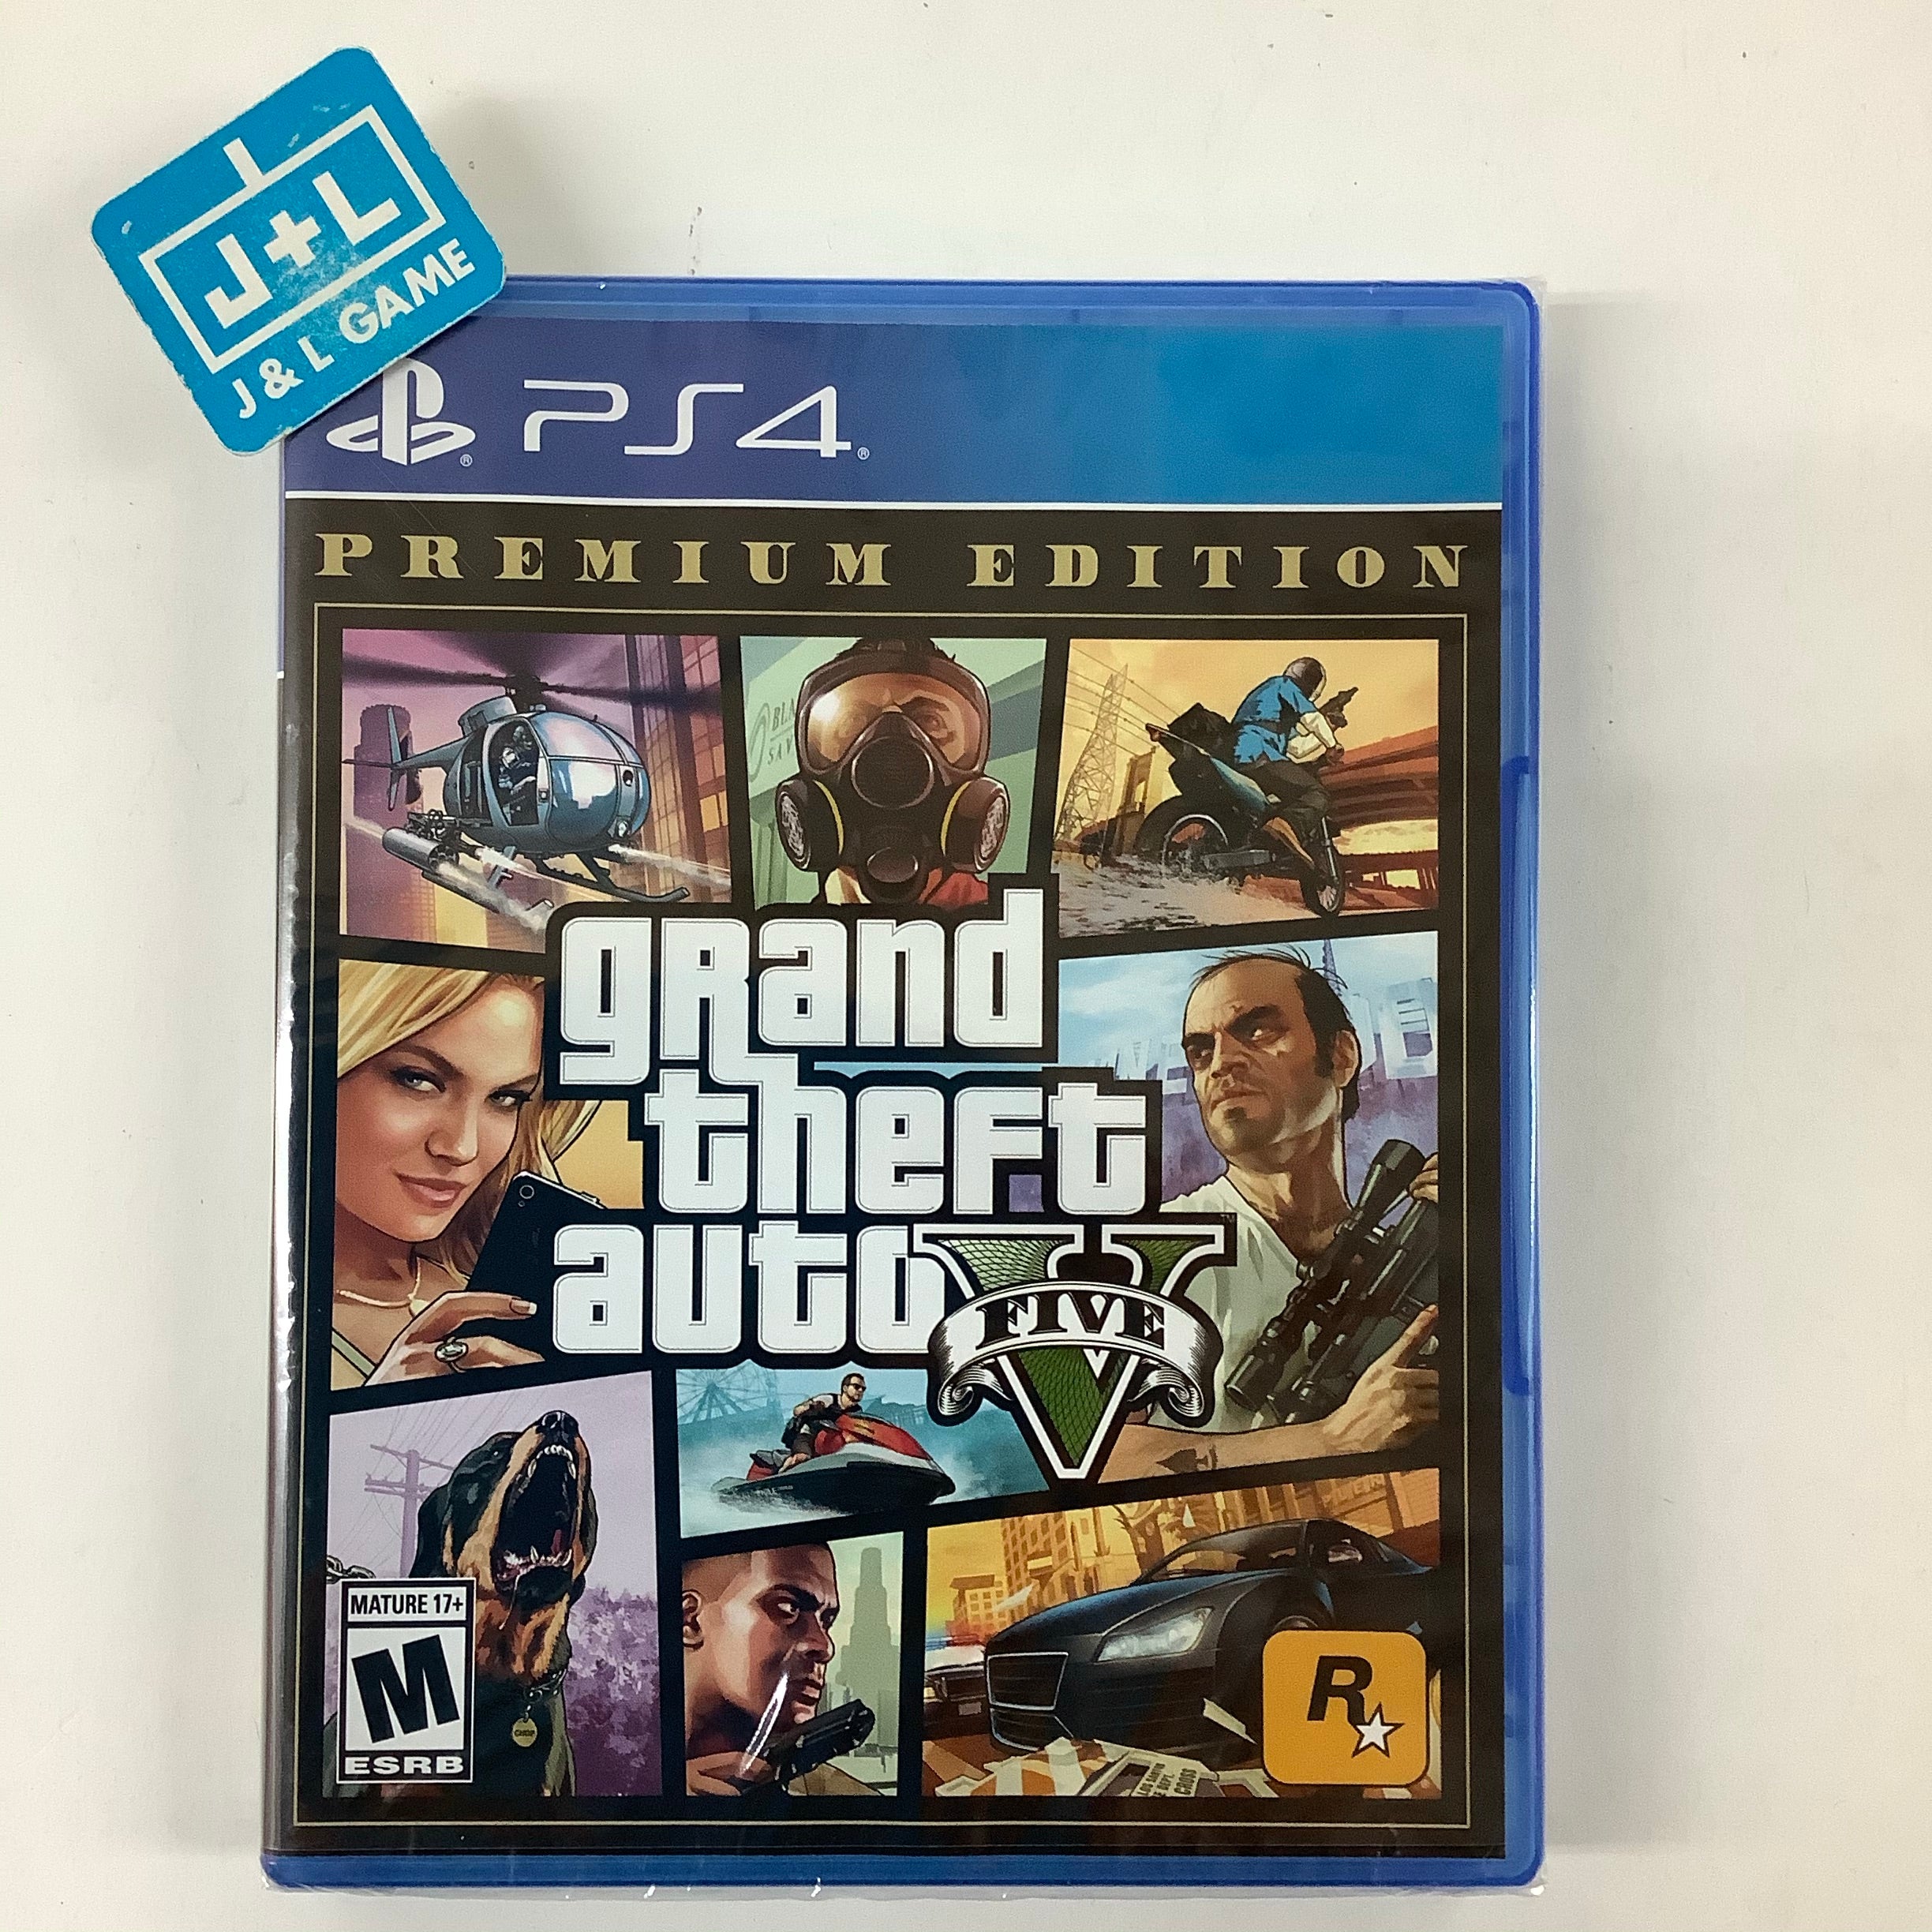 Grand Theft Auto V Premium Edition - (PS4) Playstation 4 Video Games Rockstar Games   